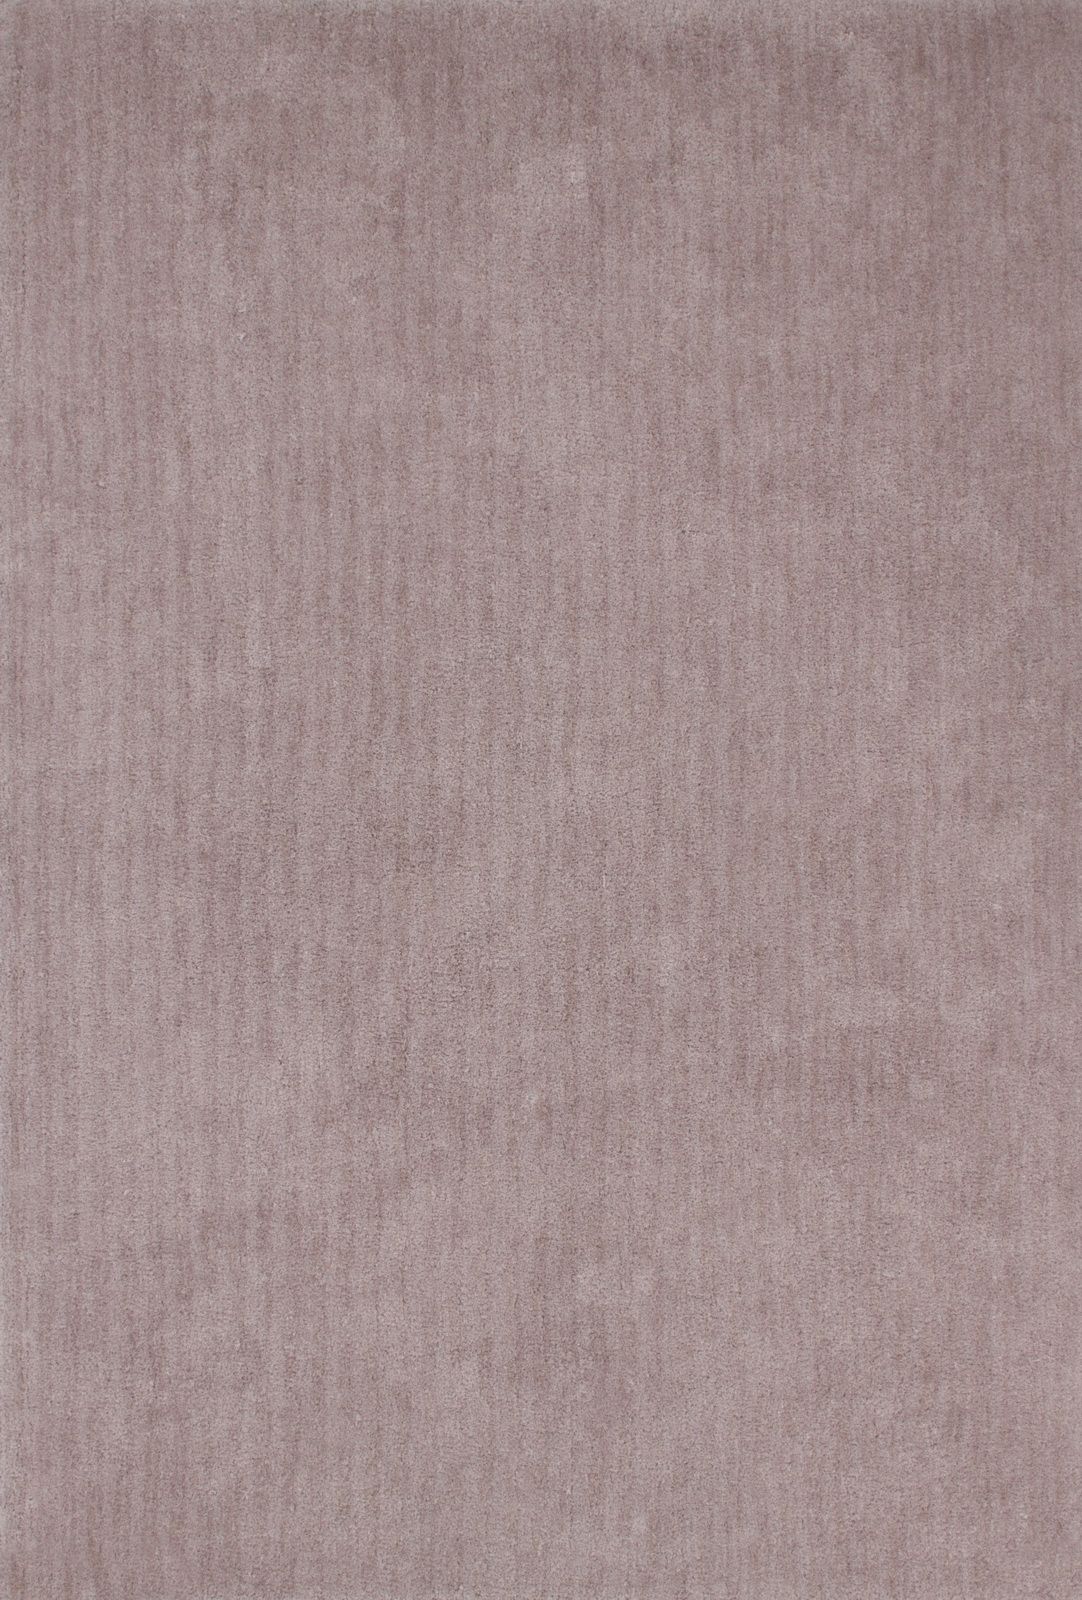 Ručne všívaný koberec Velvet 500 Beige (150 x 80 cm)